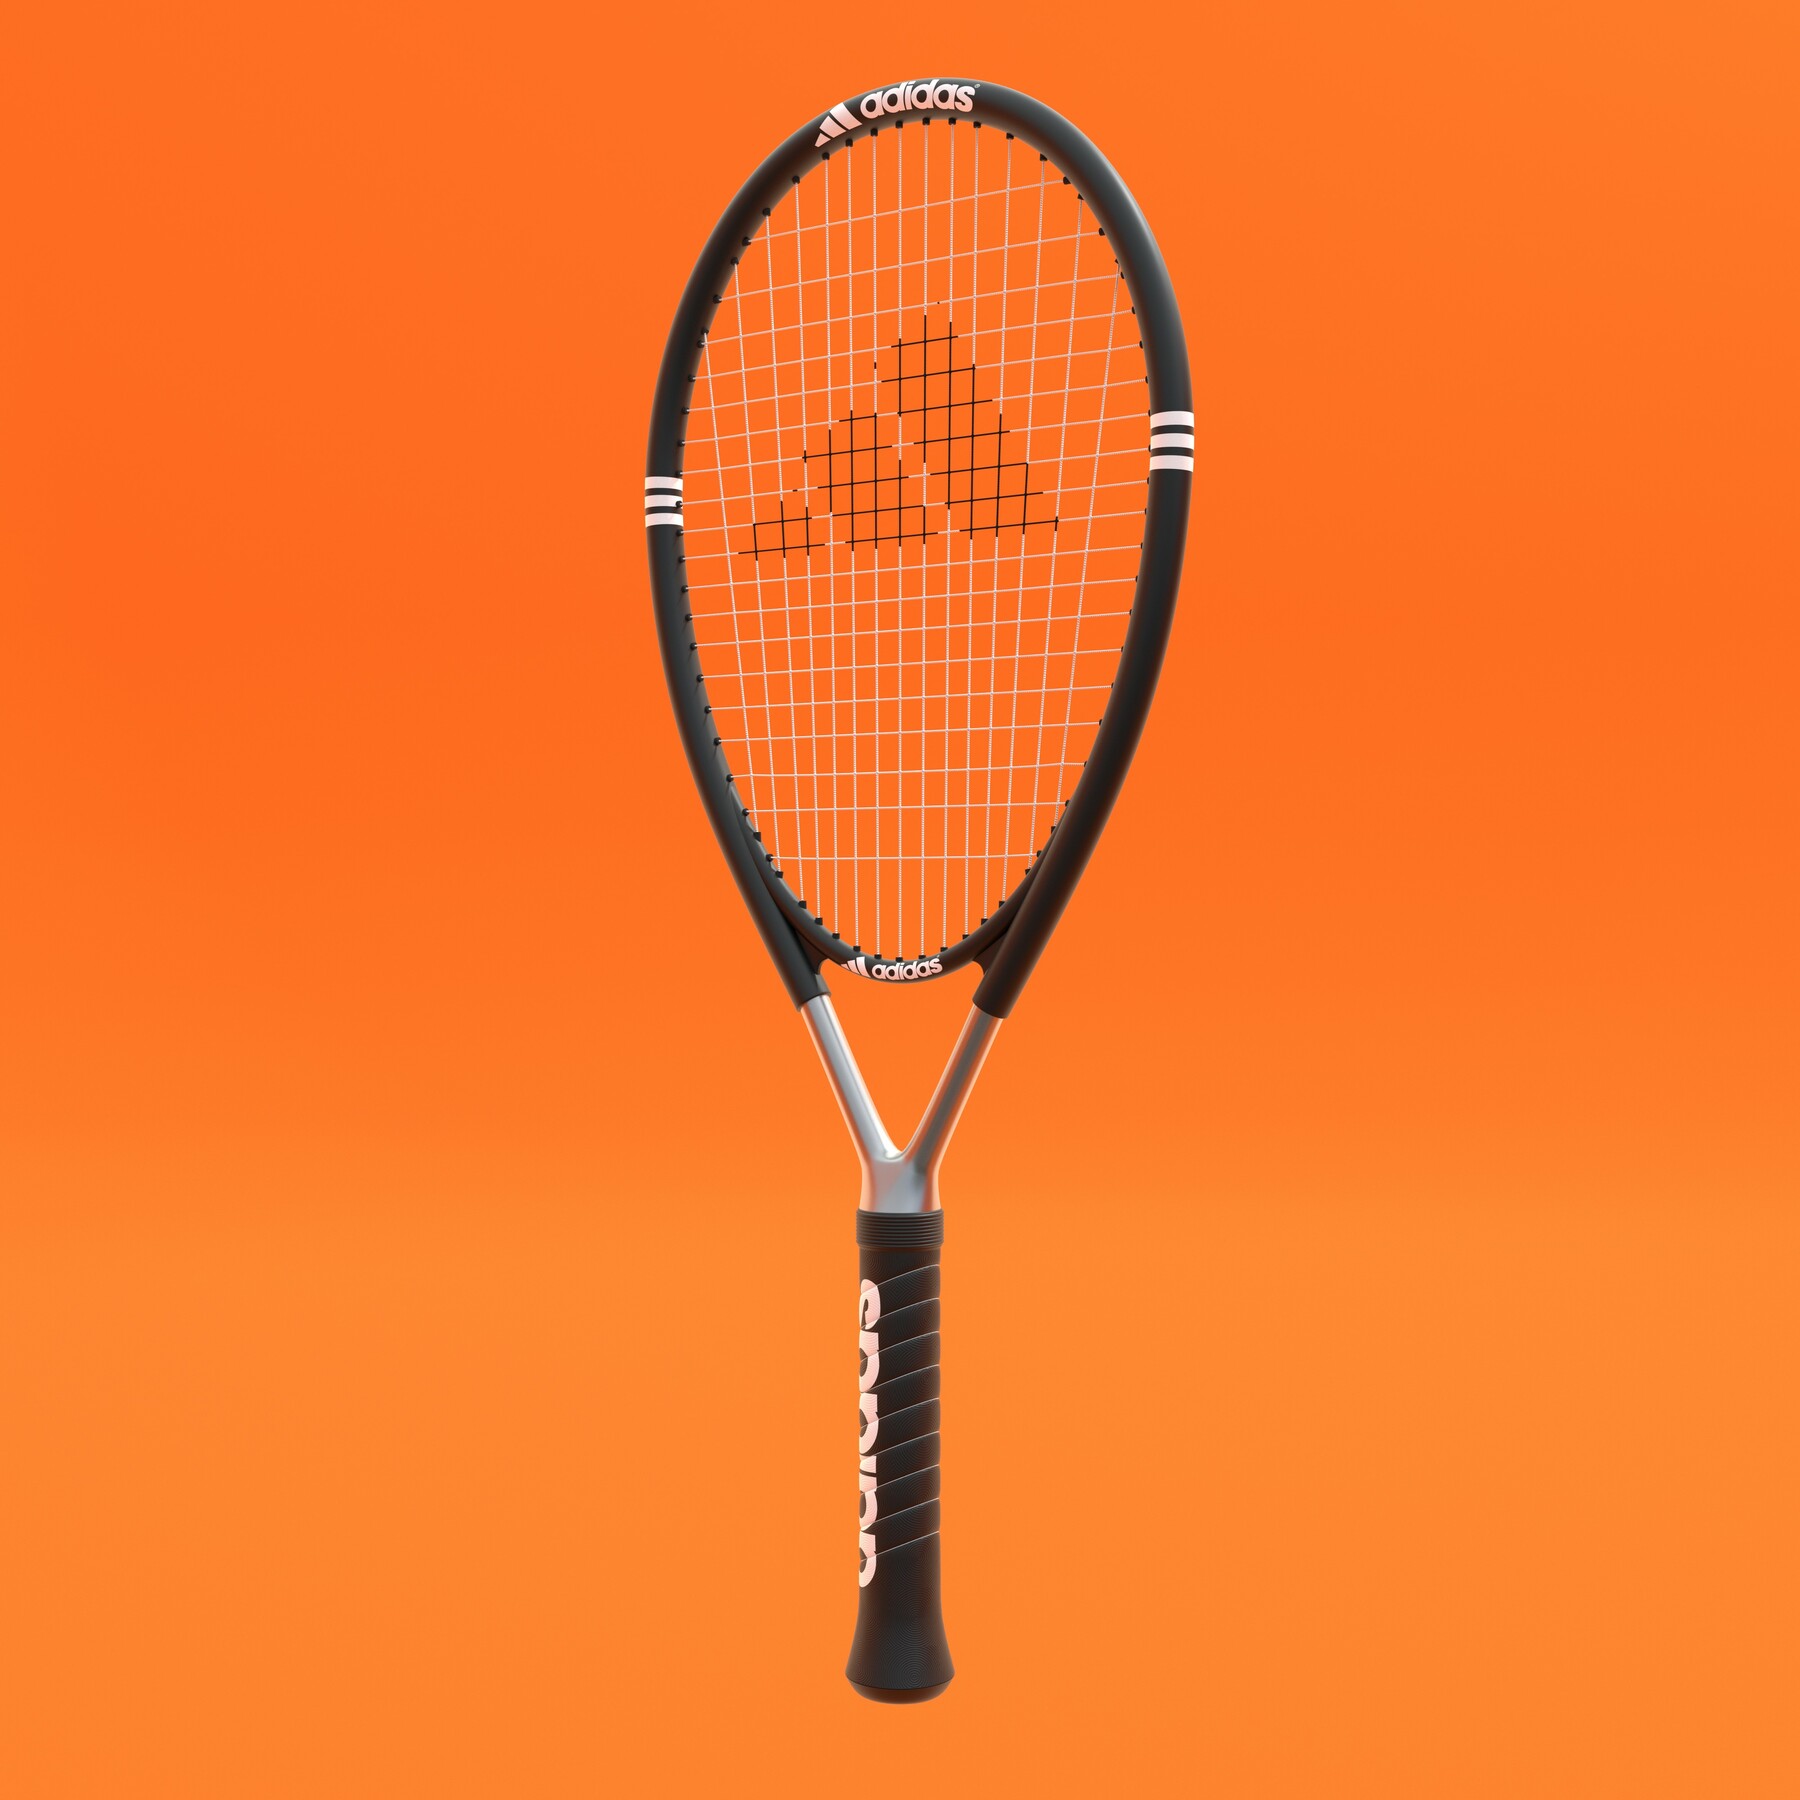 Adidas Tennis & Raquet Sports Equipment | Mercari